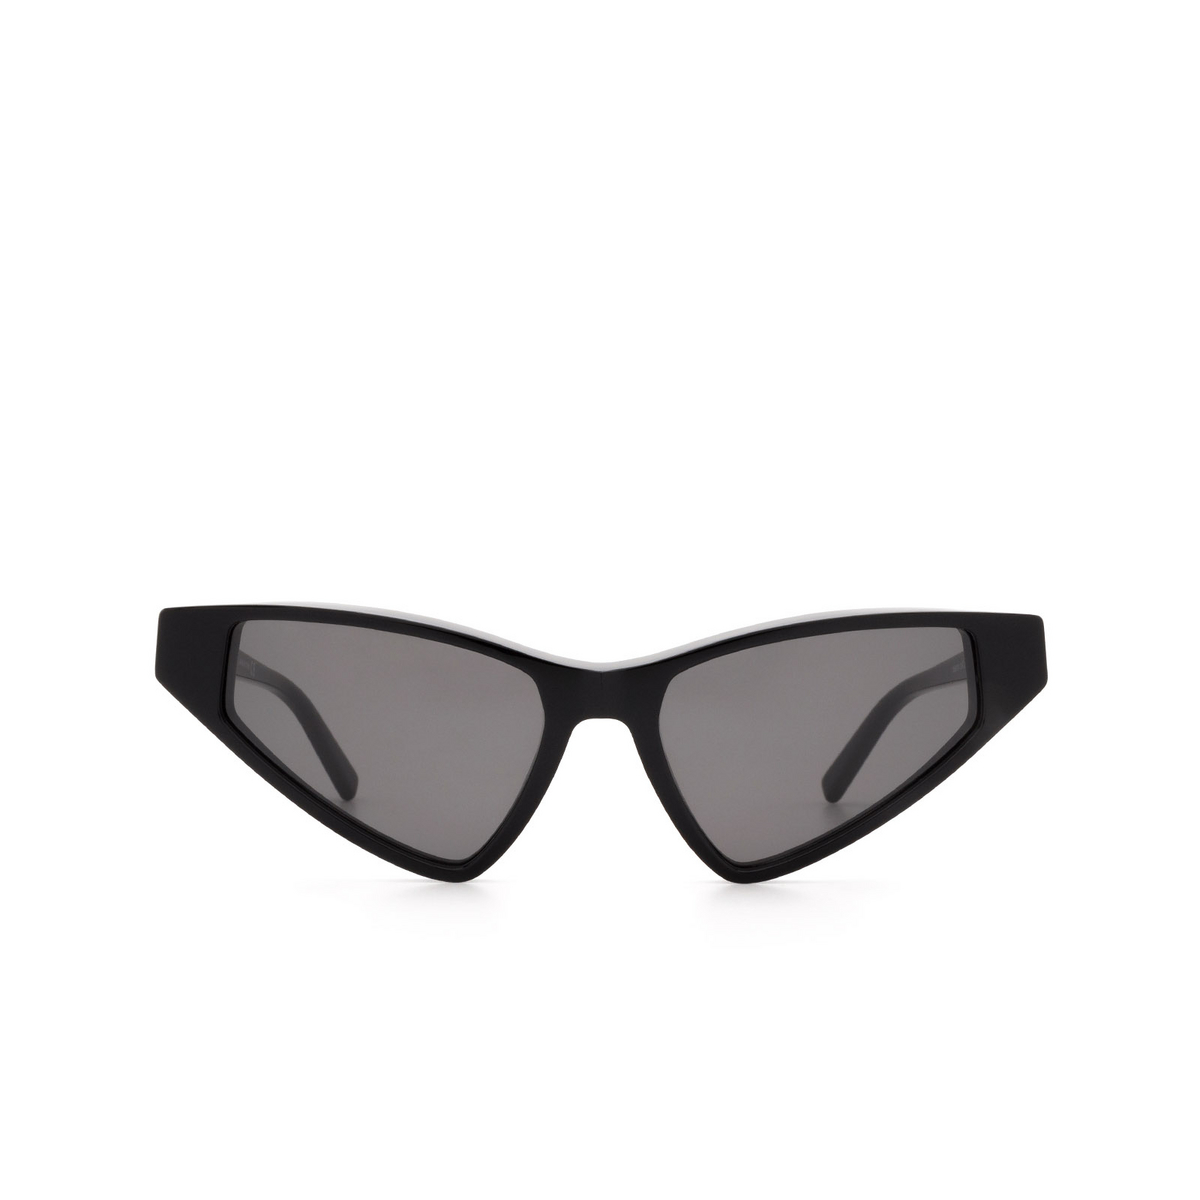 Sportmax® Cat-eye Sunglasses: SM0014 color Shiny Black 01A - front view.